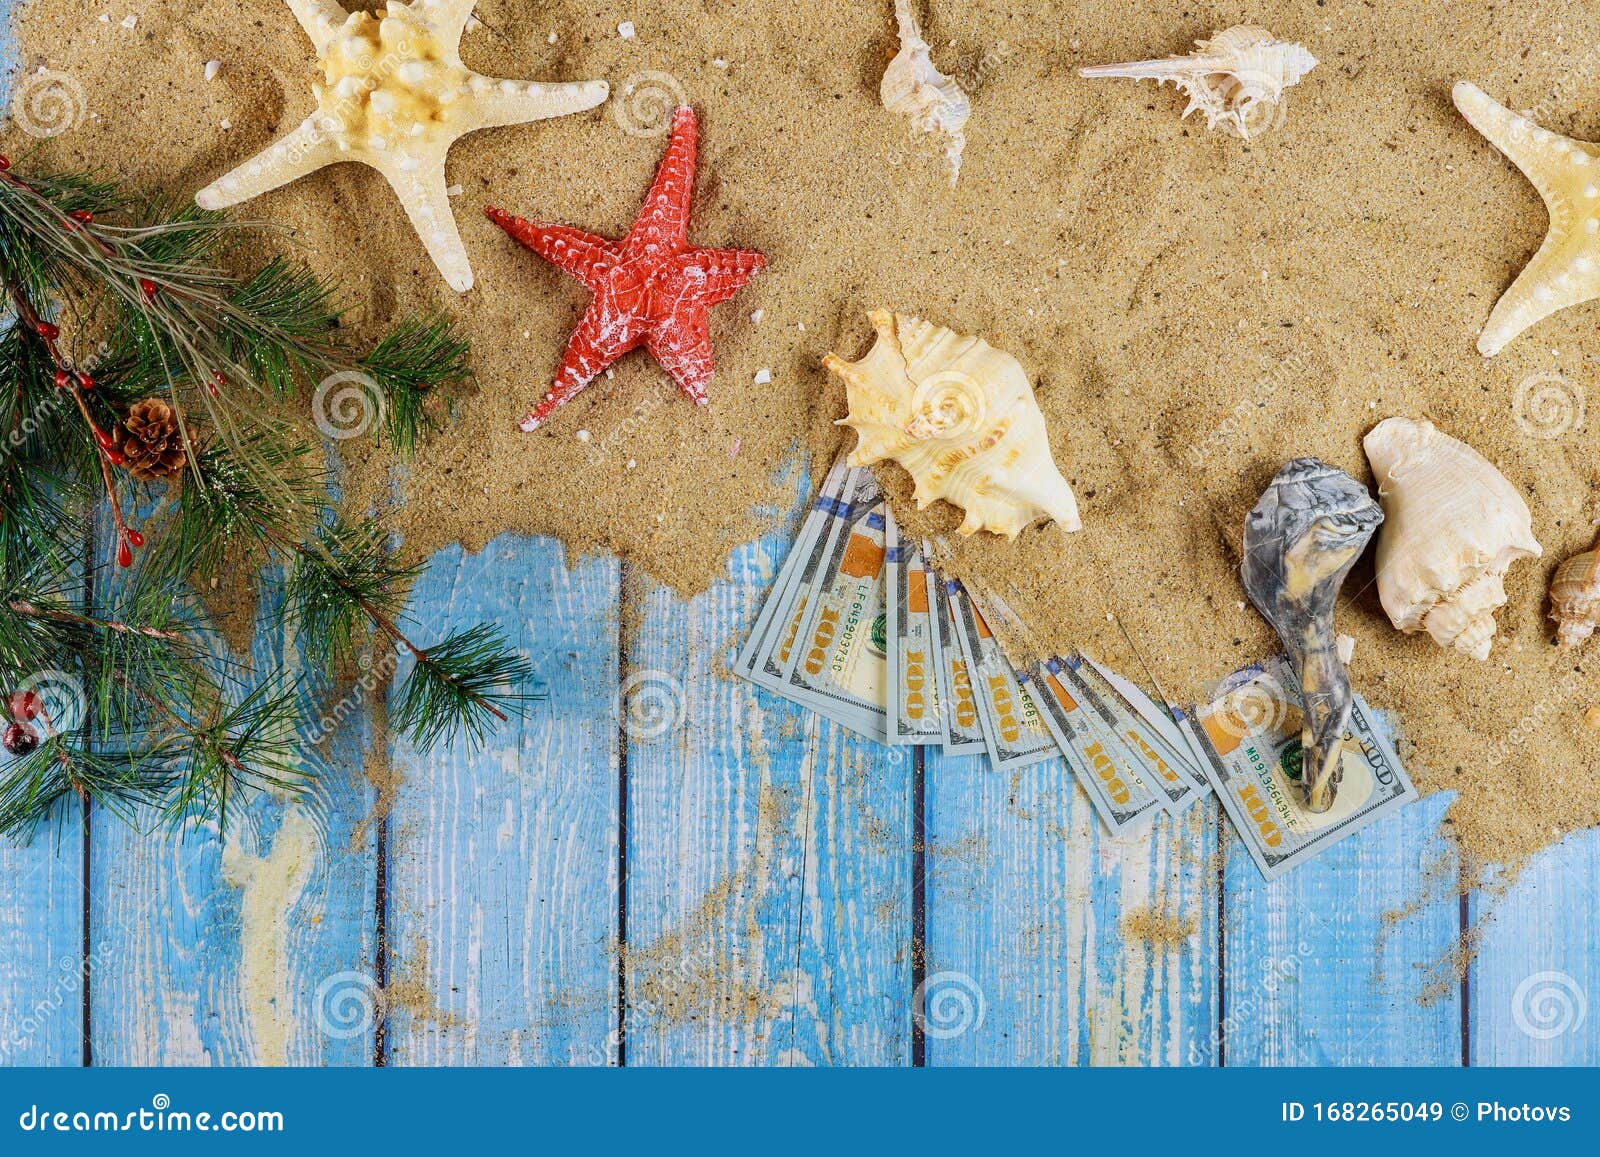 New! Sand Dollar,Starfish,Conch Blue Water Shells Ball Christmas Ornament 